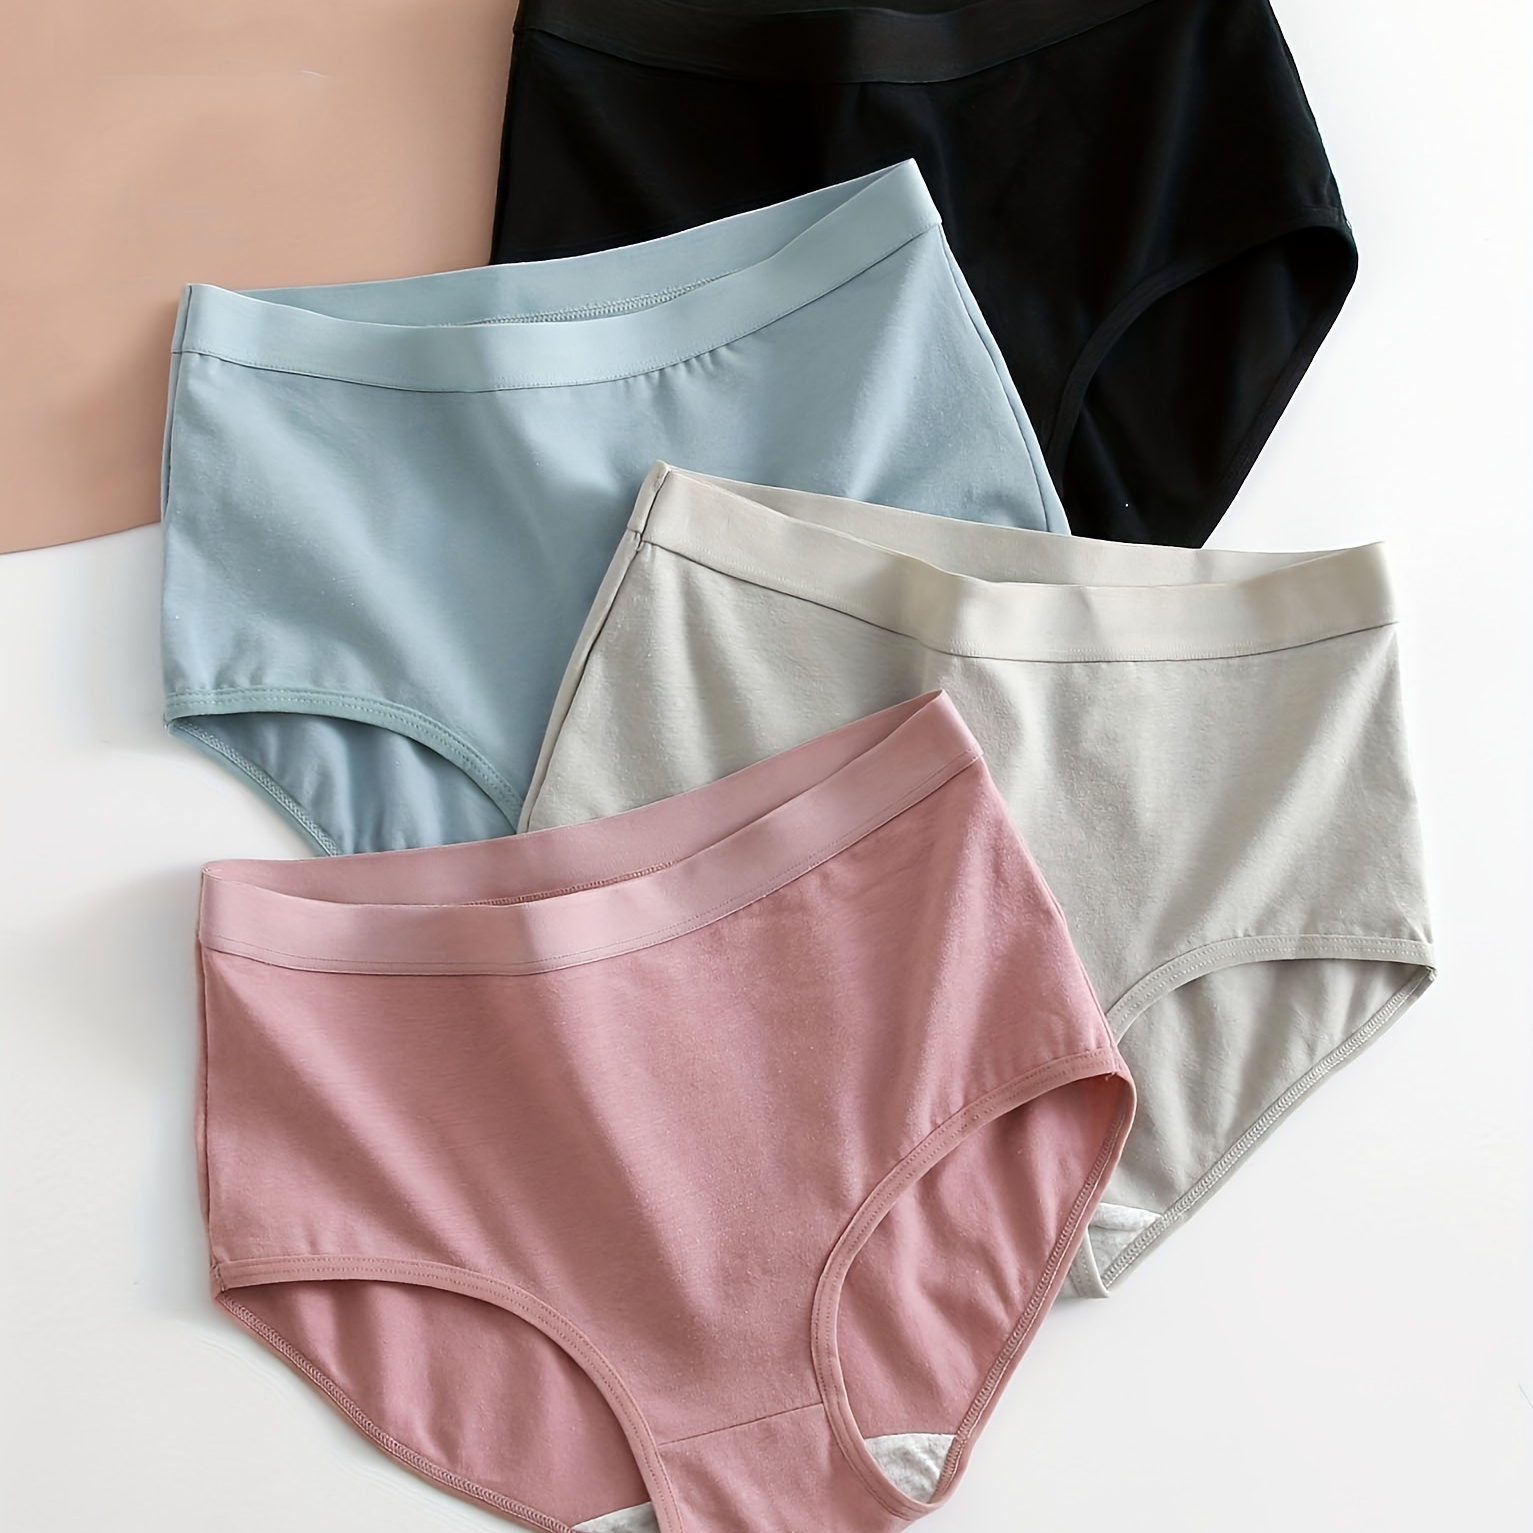 

4pcs Simple Solid Briefs, Comfy High Waist Everyday Intimates Panties, Women's Lingerie & Underwear